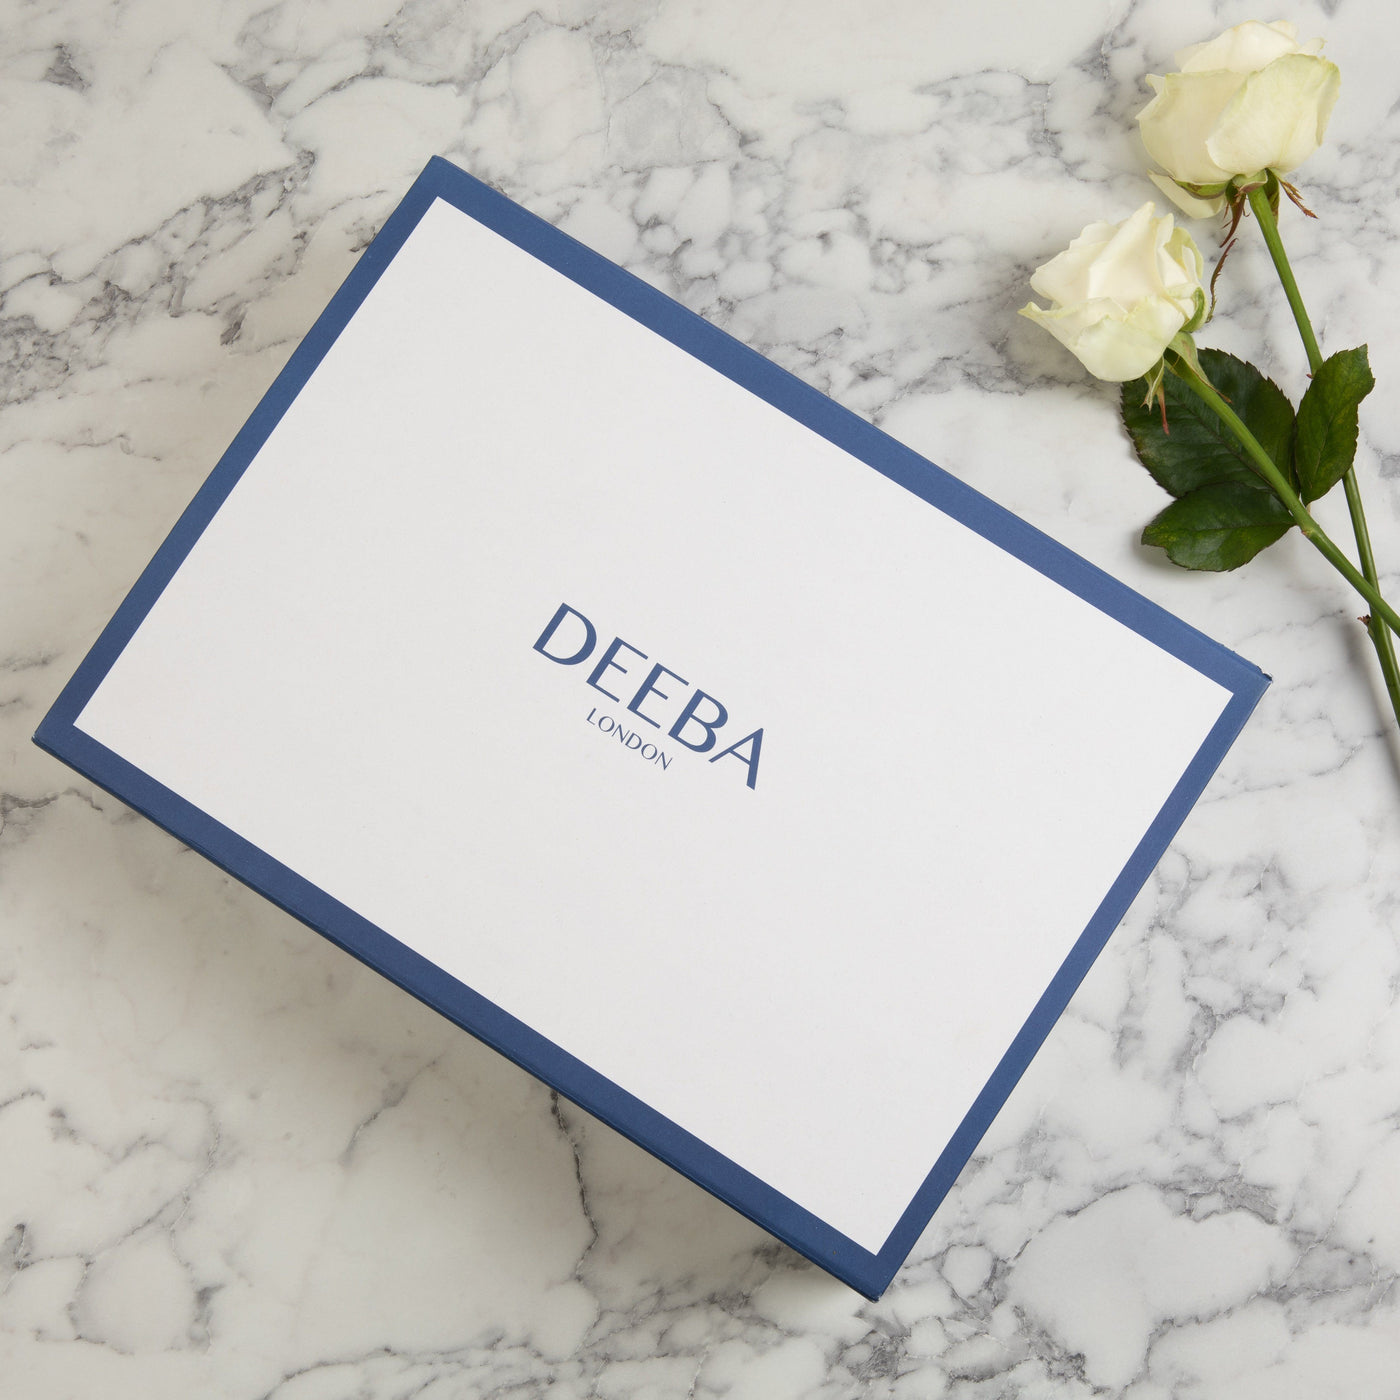 Gift Wrap Deeba London 